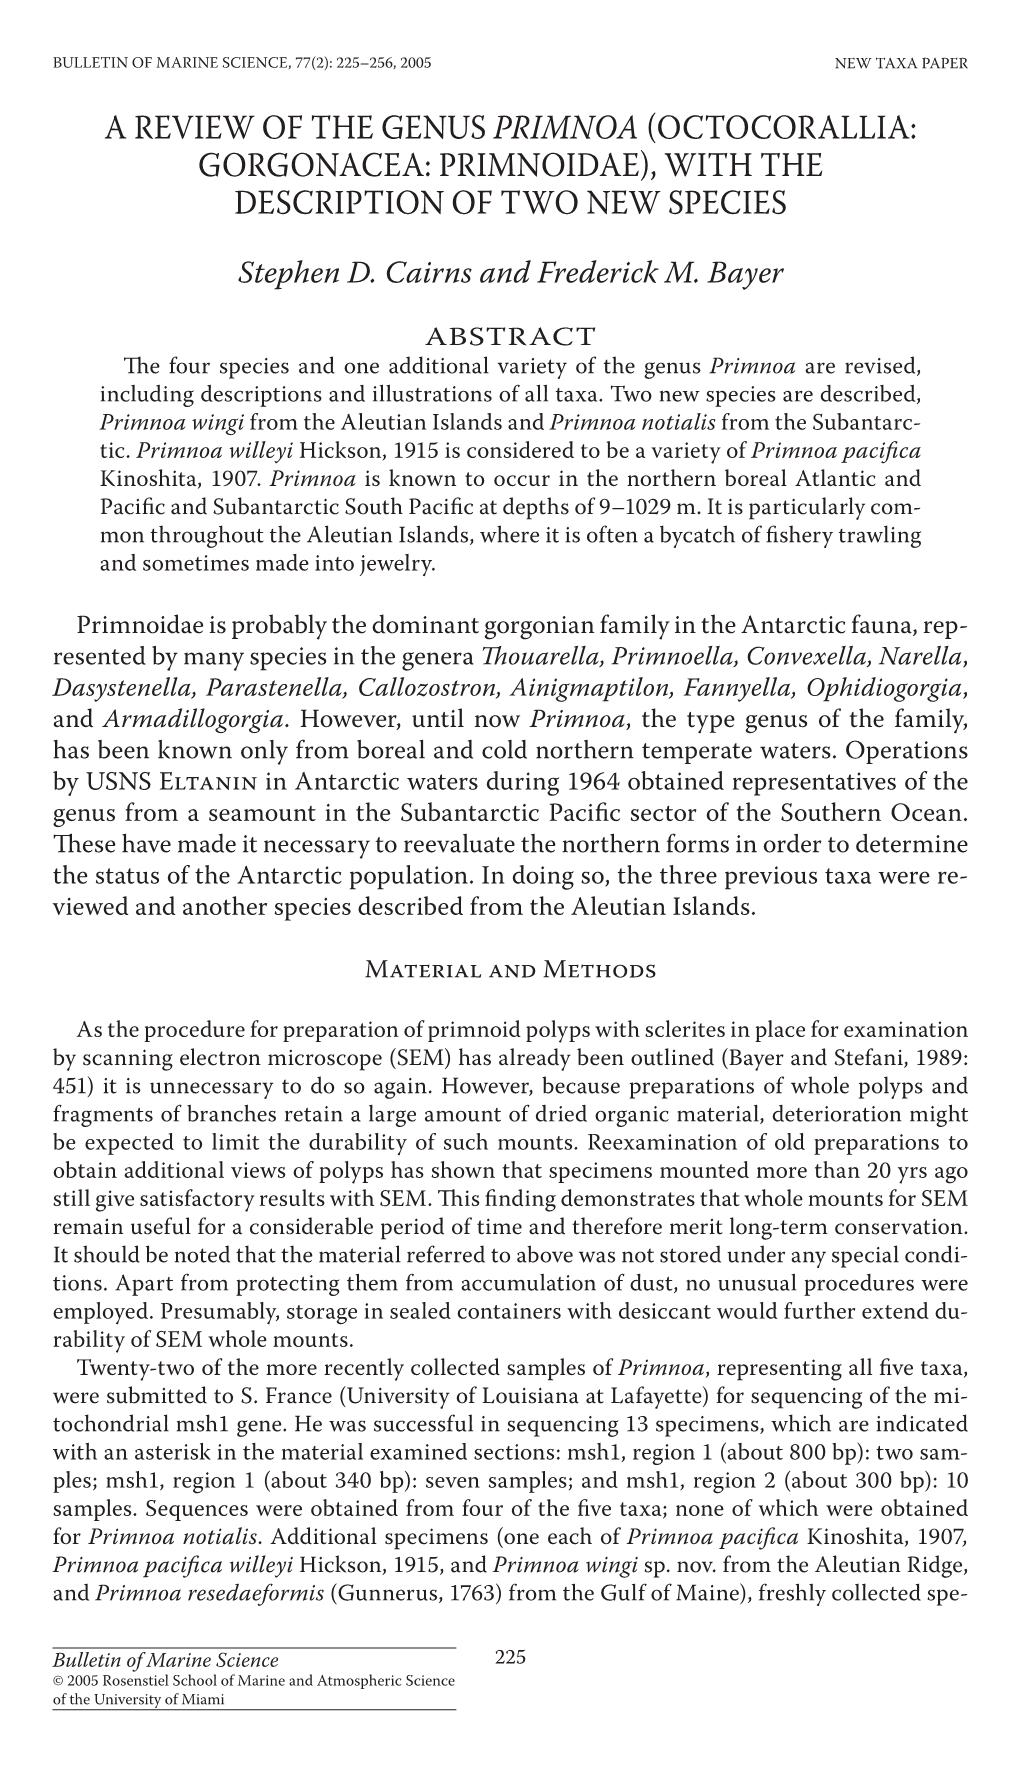 A Review of the Genus &lt;I&gt;Primnoa&lt;/I&gt; (Octocorallia: Gorgonacea: Primnoidae), with the Description of Two New Species